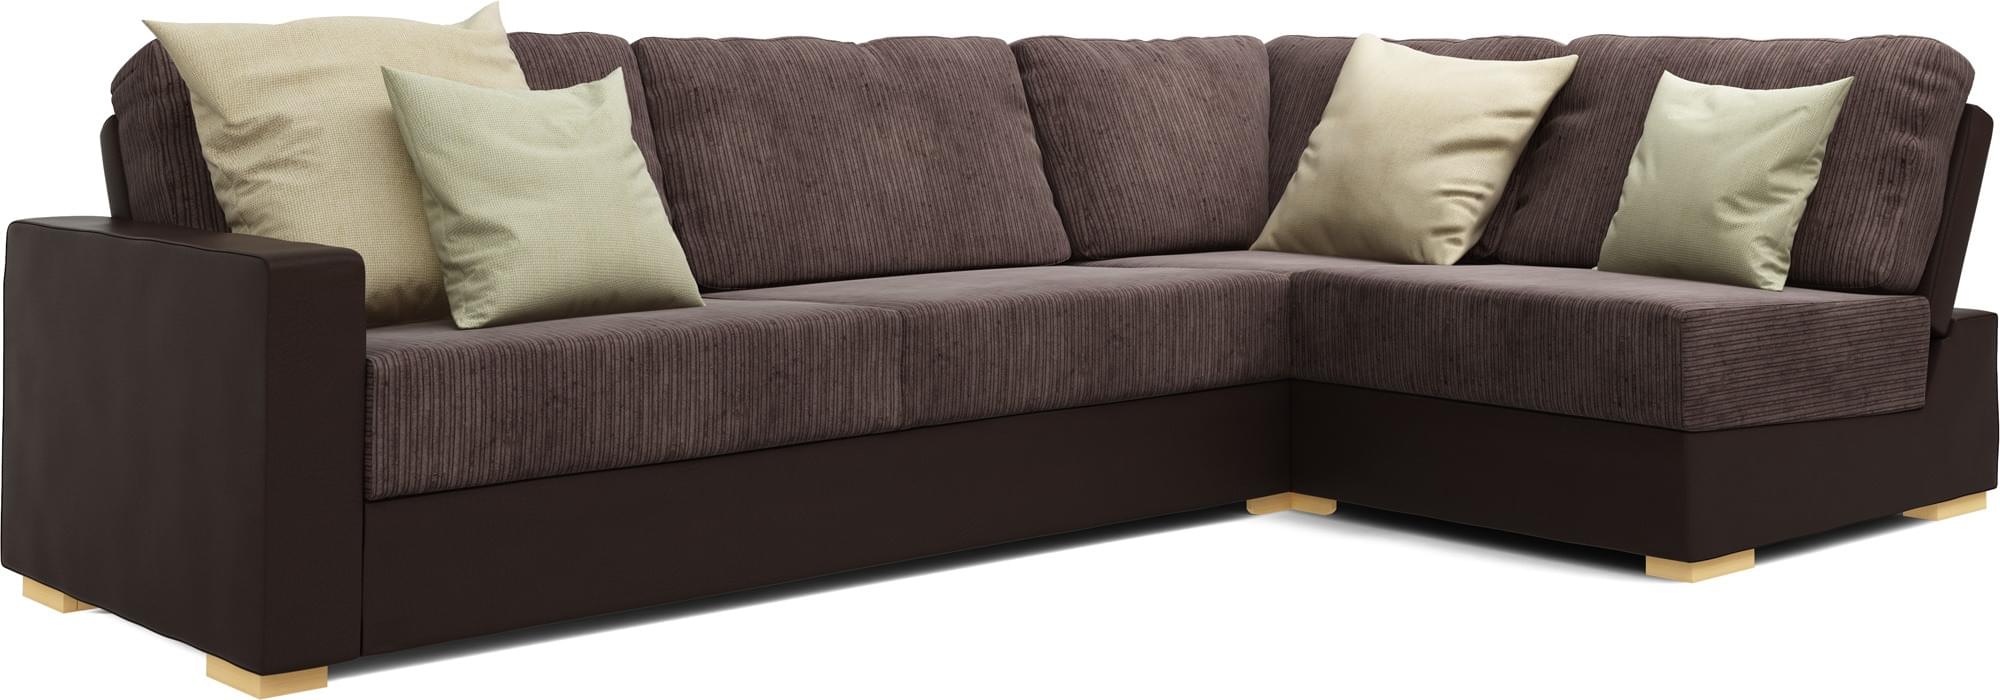 Ula Armless 3X2 Double Sofa Bed